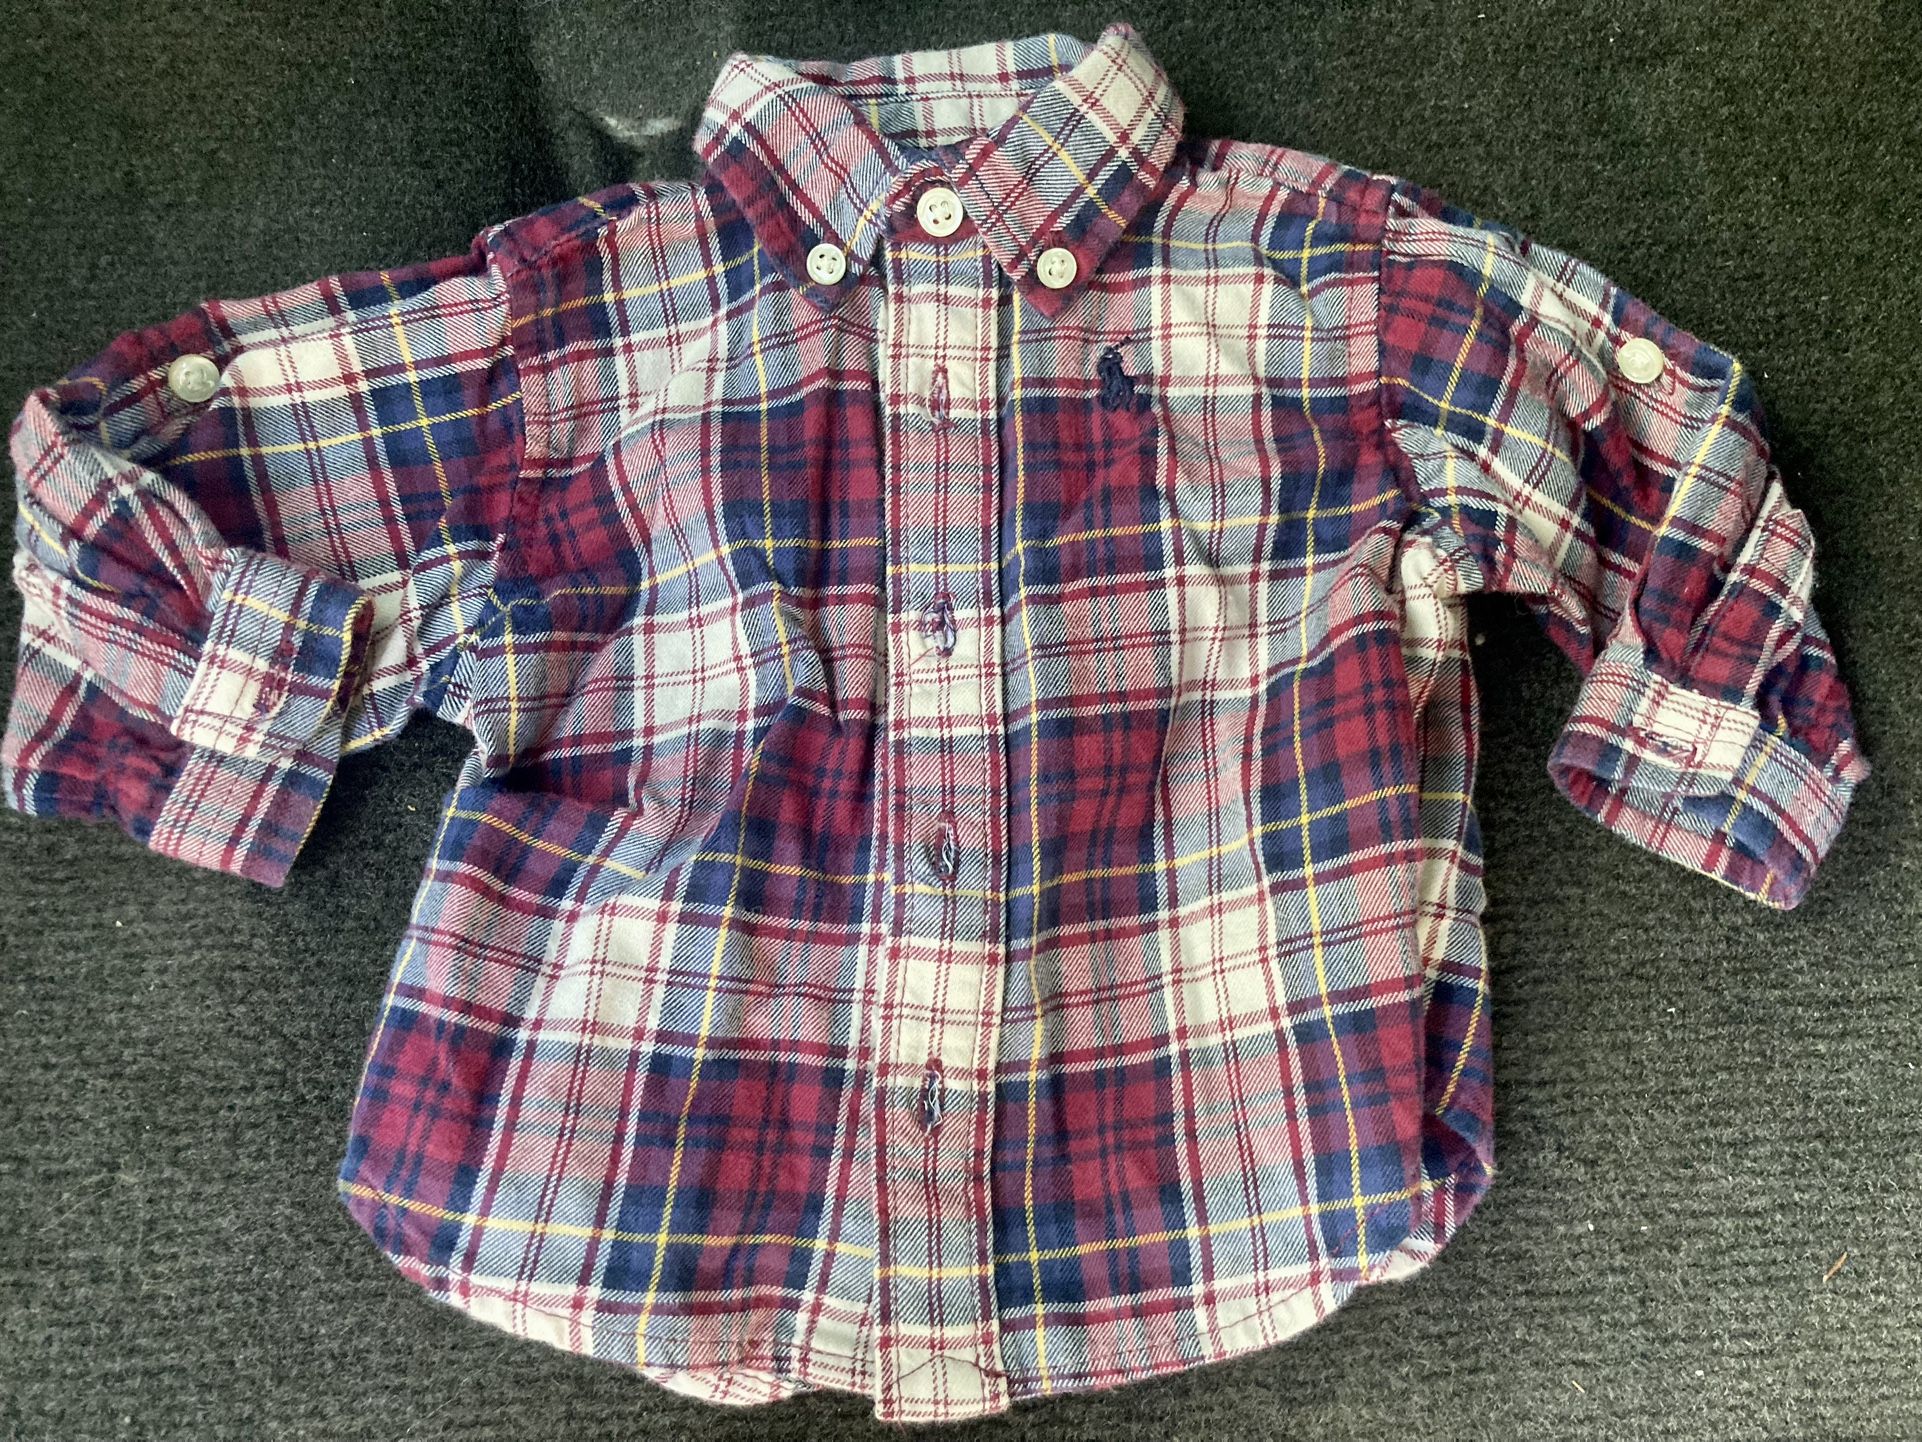 Infant Ralph Lauren Plaid Shirt